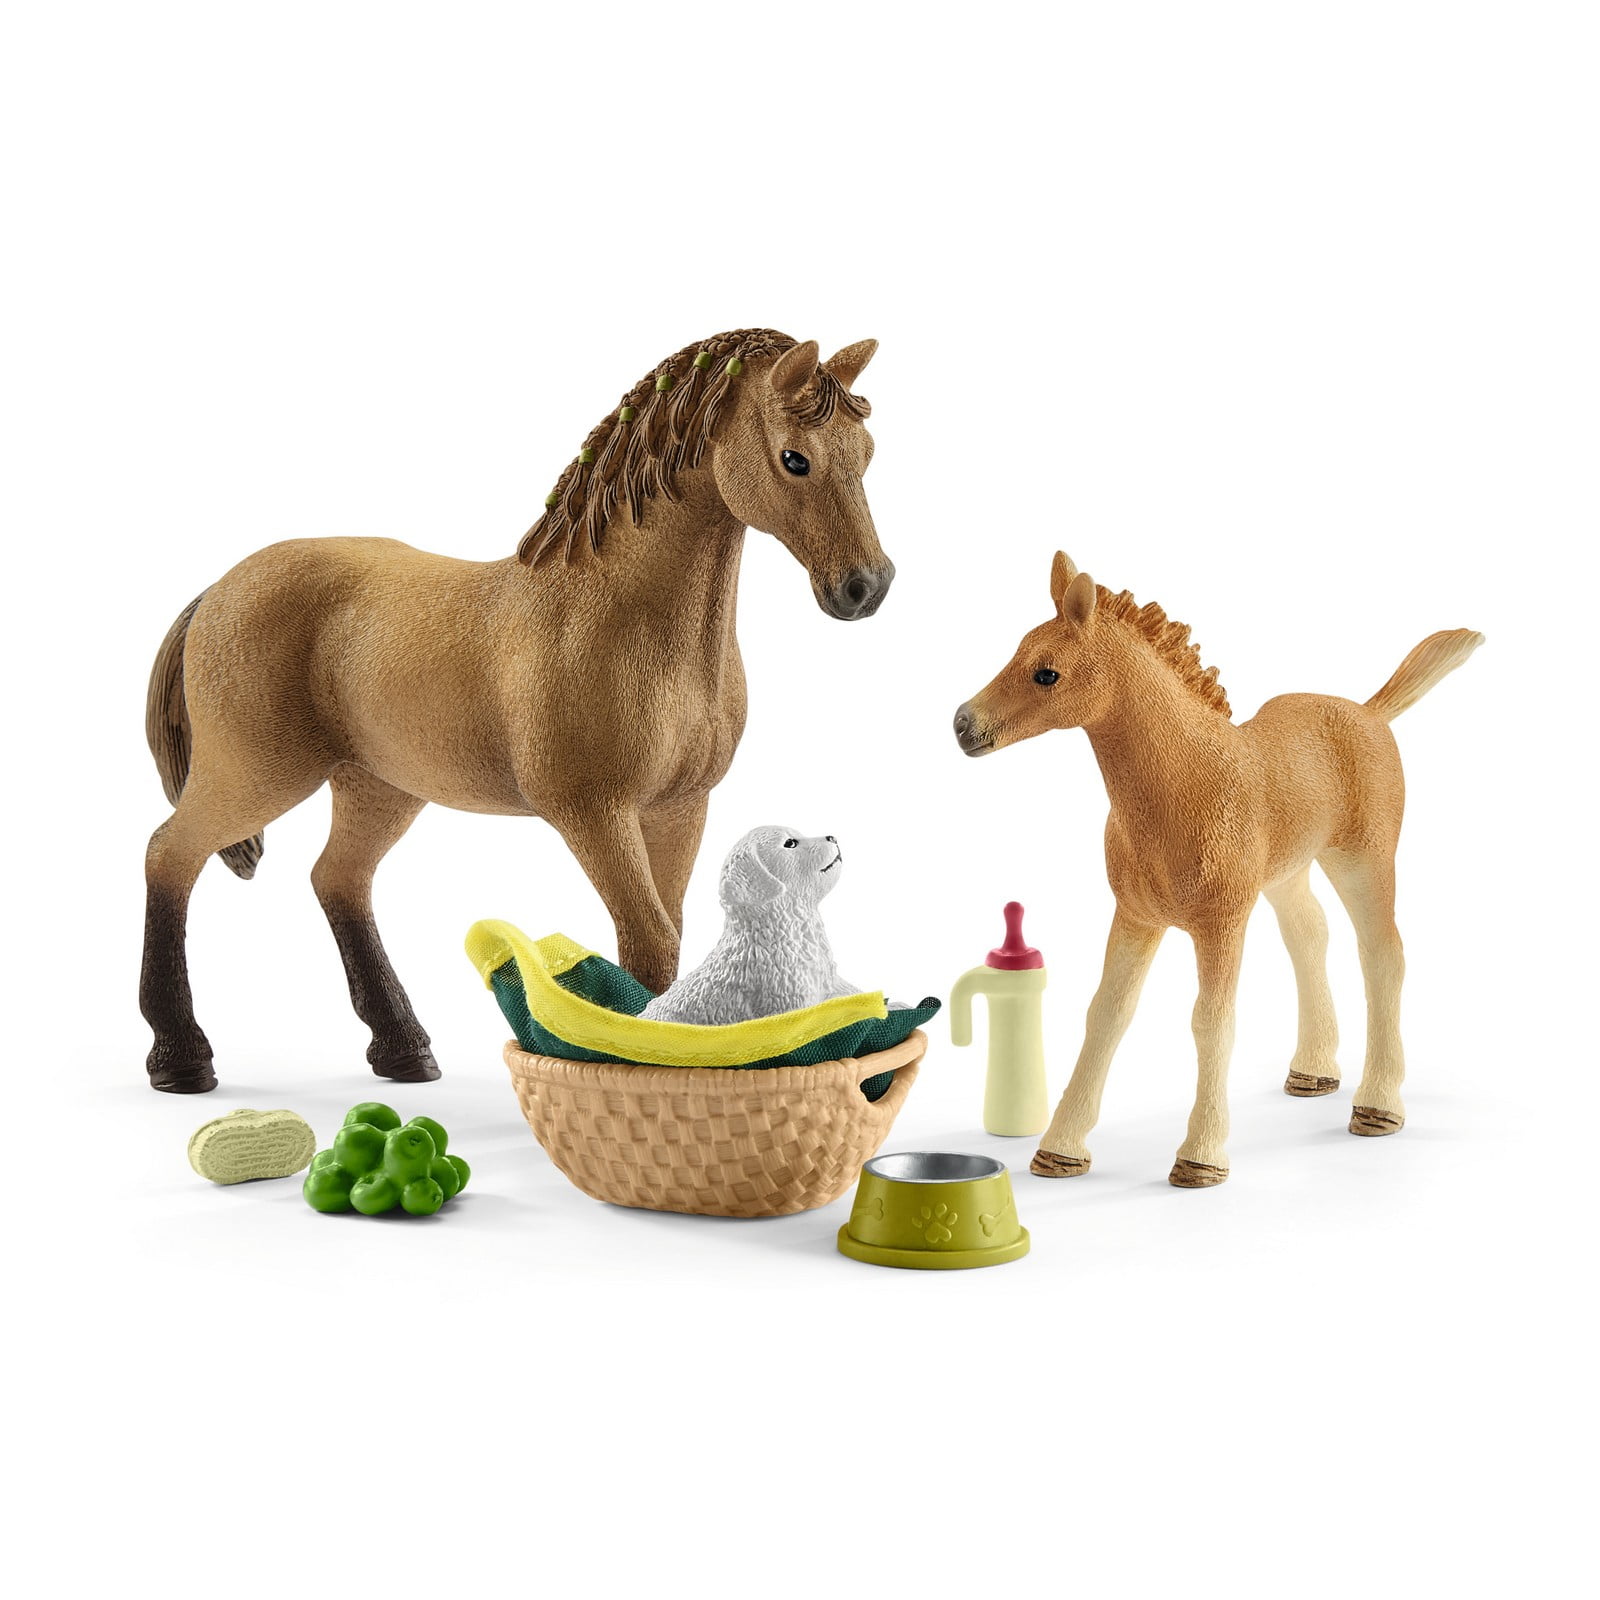 Schleich QUARTER HORSE STALLION solid plastic toy farm pet male animal  NEW 